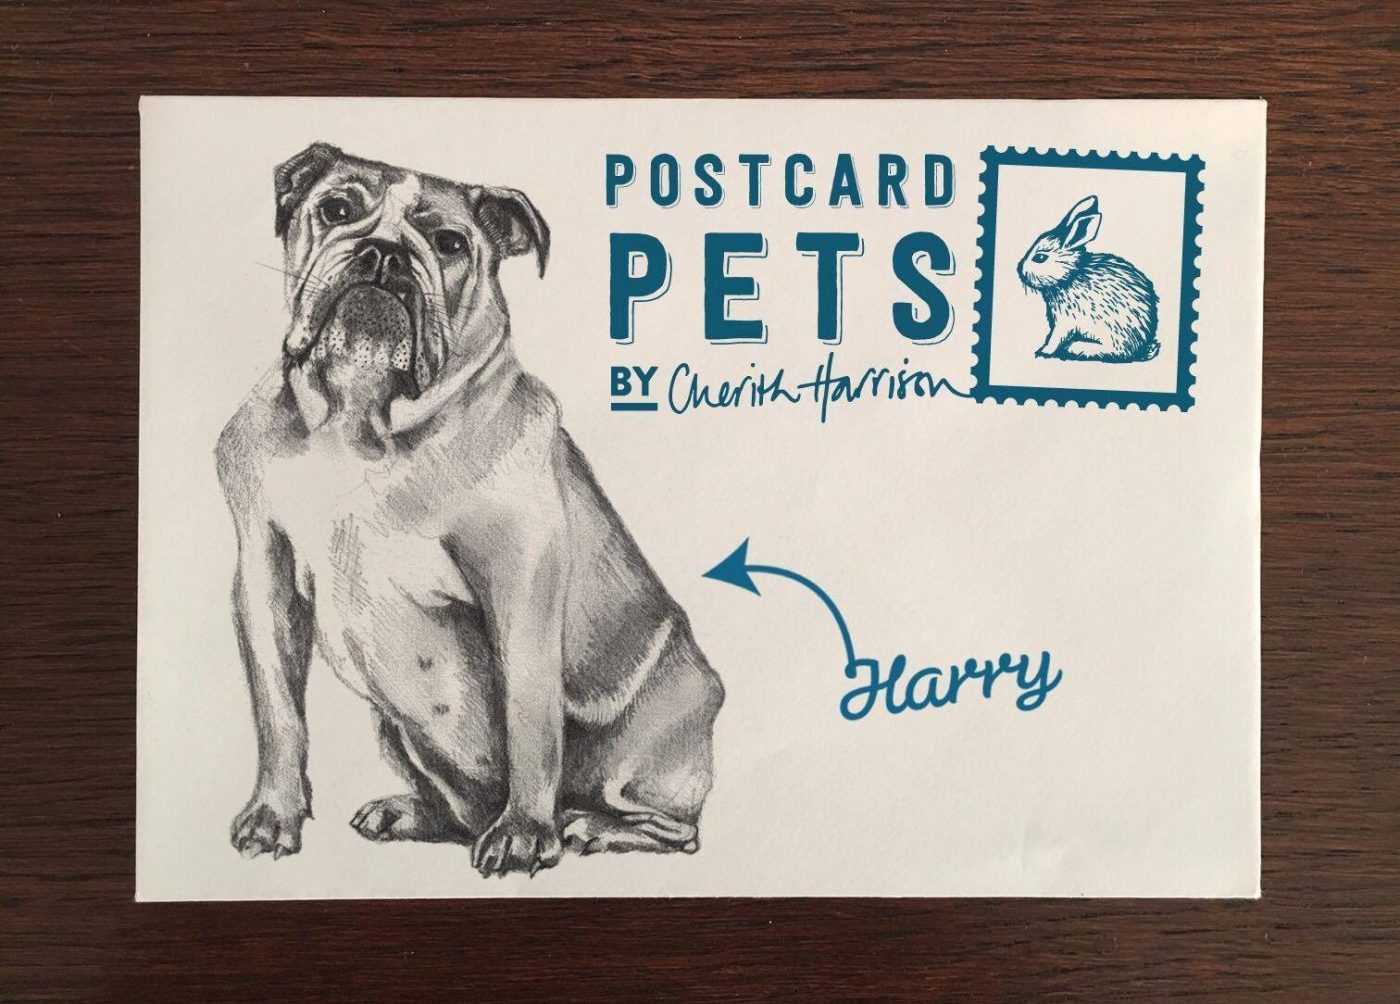 Postcard Pets by Cherith Harrison